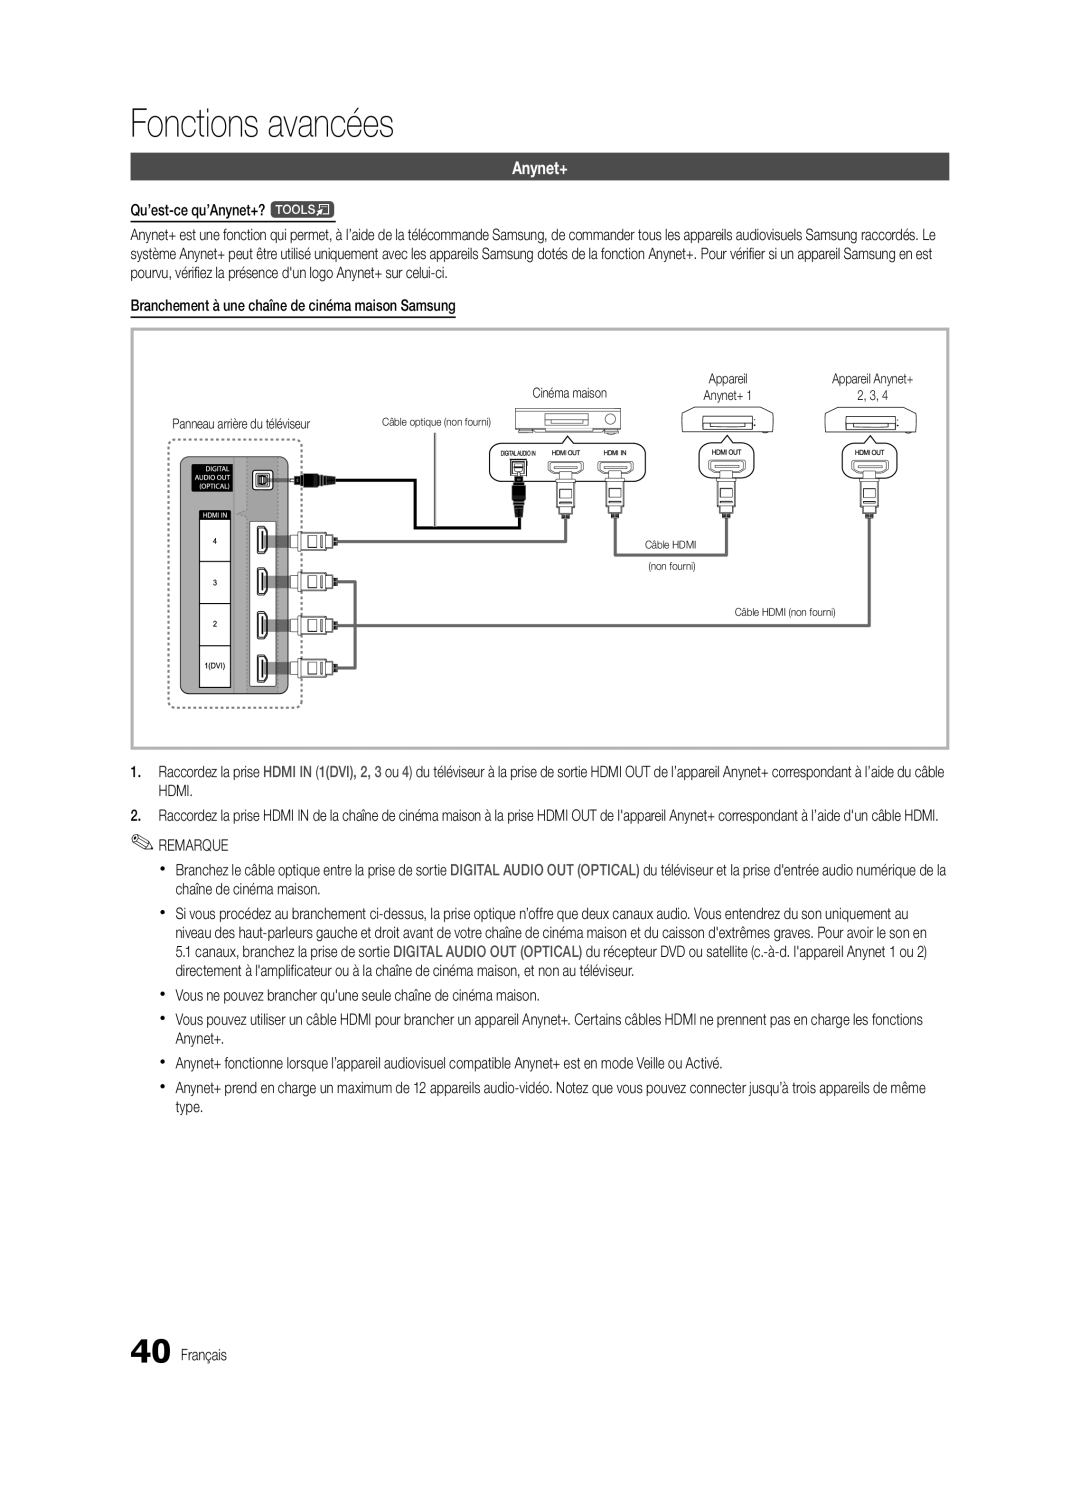 Samsung BN68-02711B-04 Fonctions avancées, Appareil Anynet+, Câble optique non fourni, Câble HDMI non fourni 